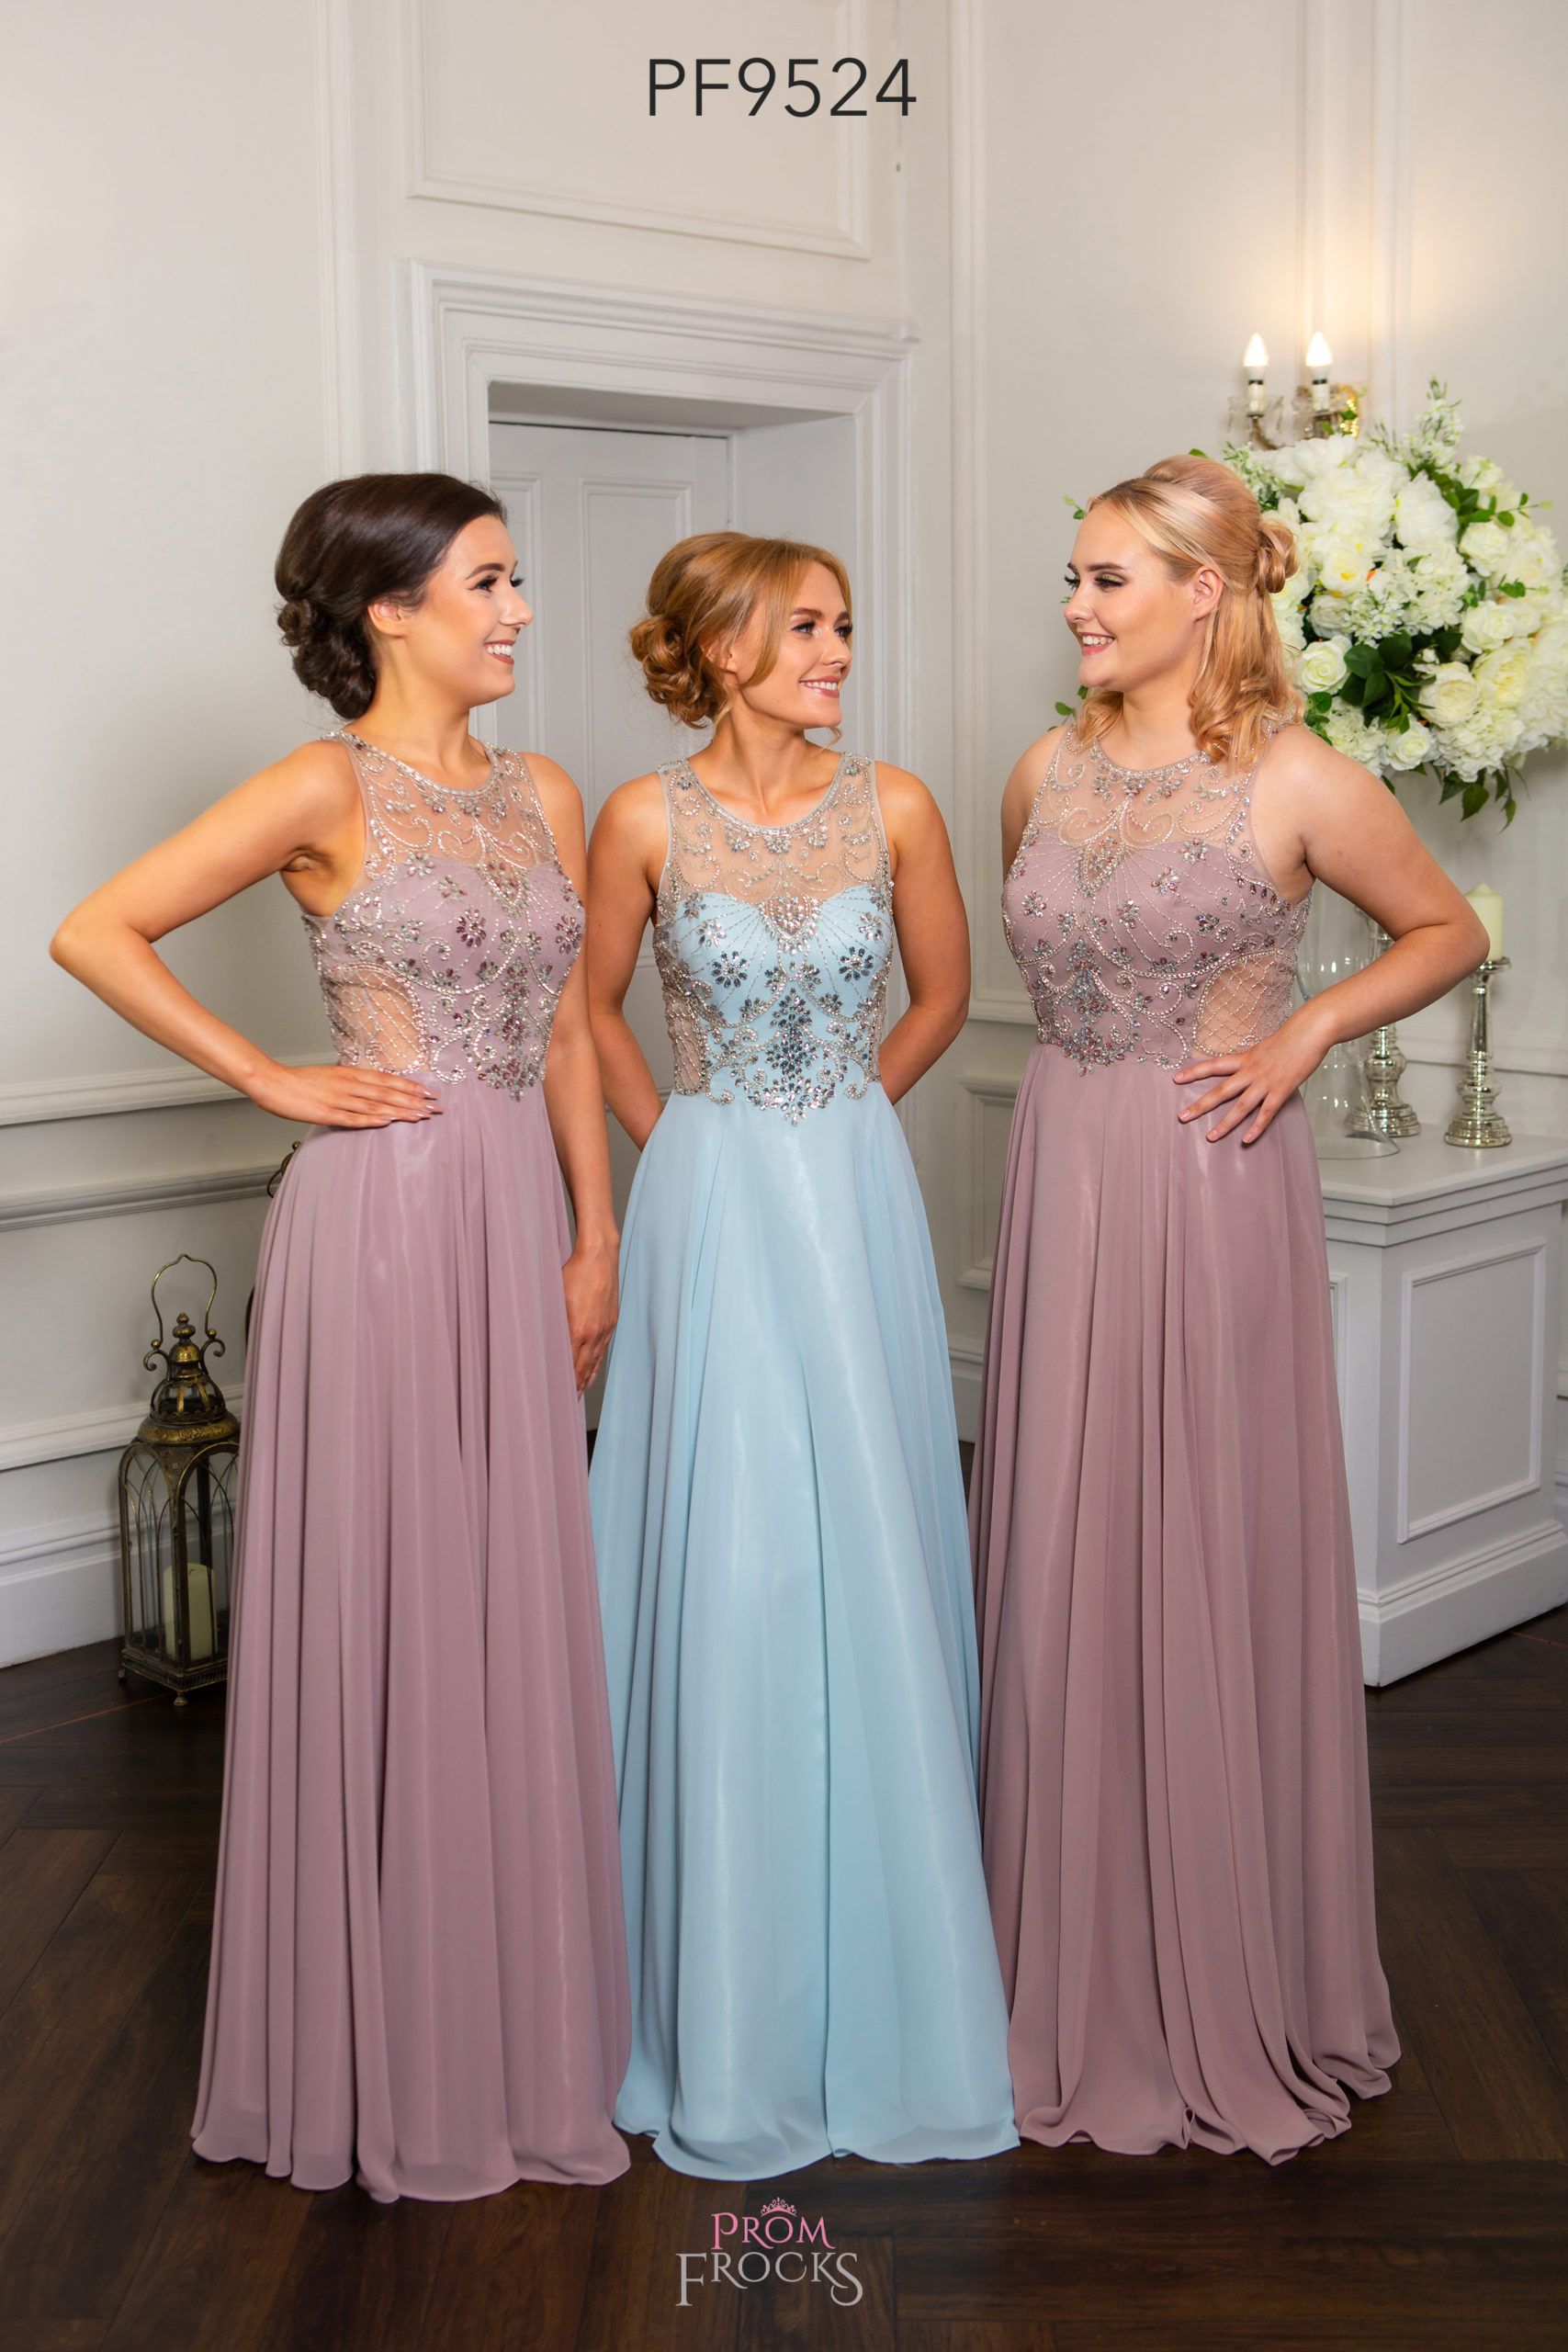 PF9524 Prom Frocks Dress | Wedding Dresses Sussex - Bridal Shop ...